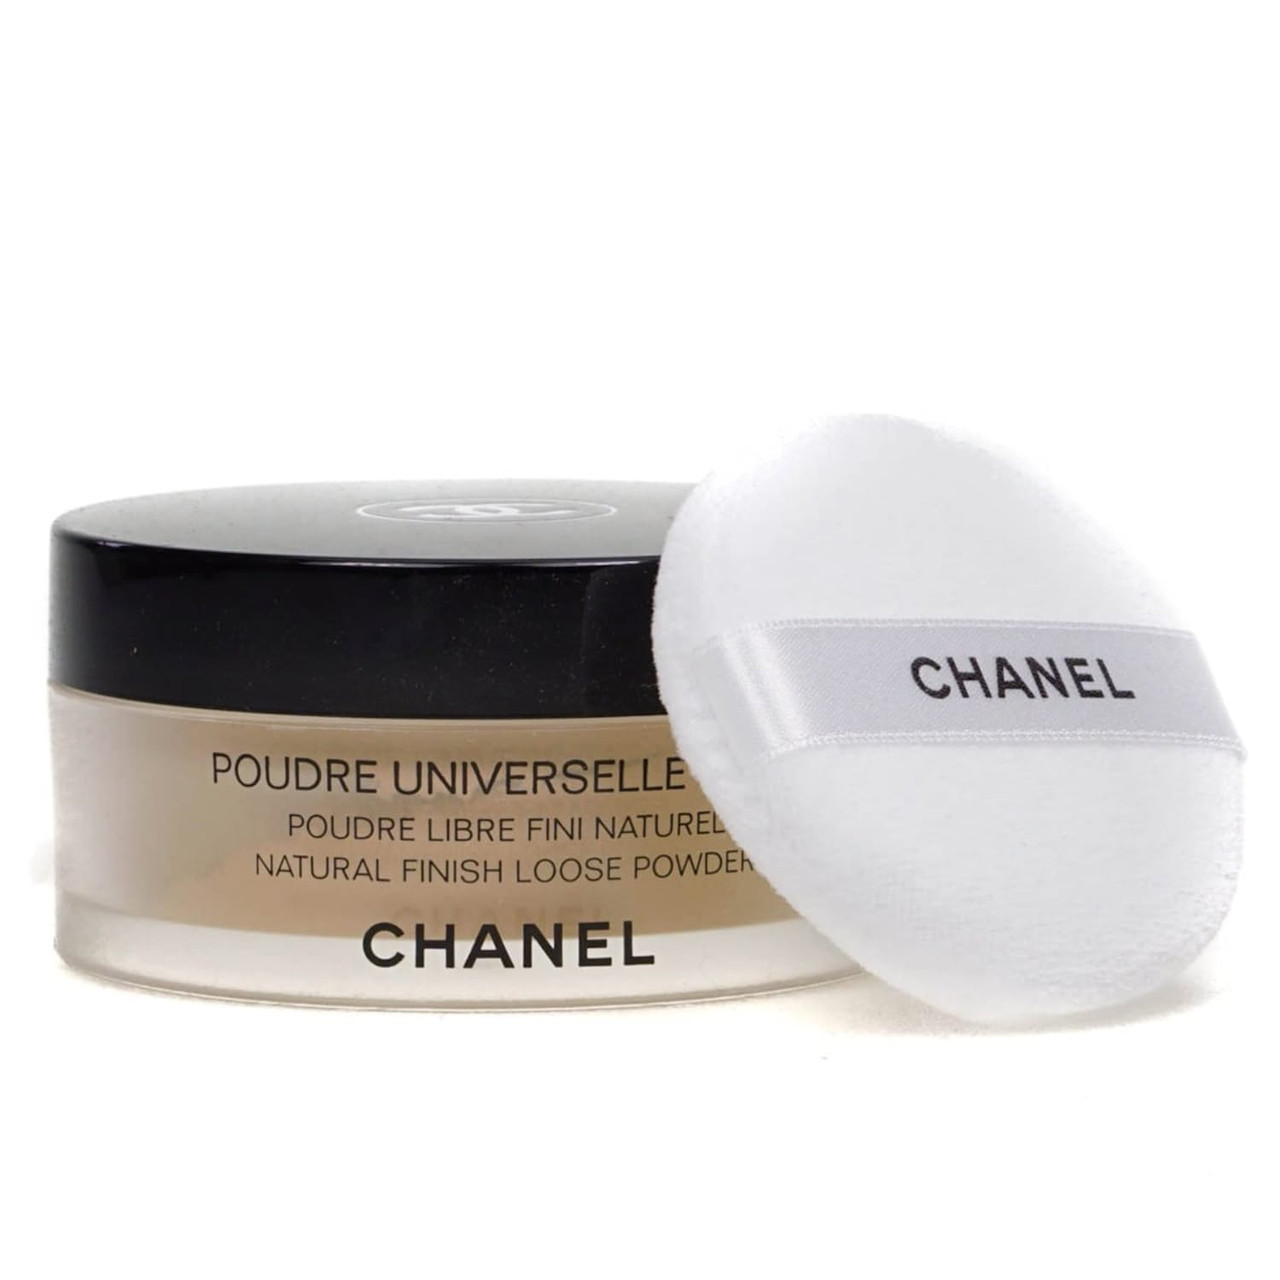 Chanel Poudre Universelle Natural Finish Loose Powder - Naturel No. 30